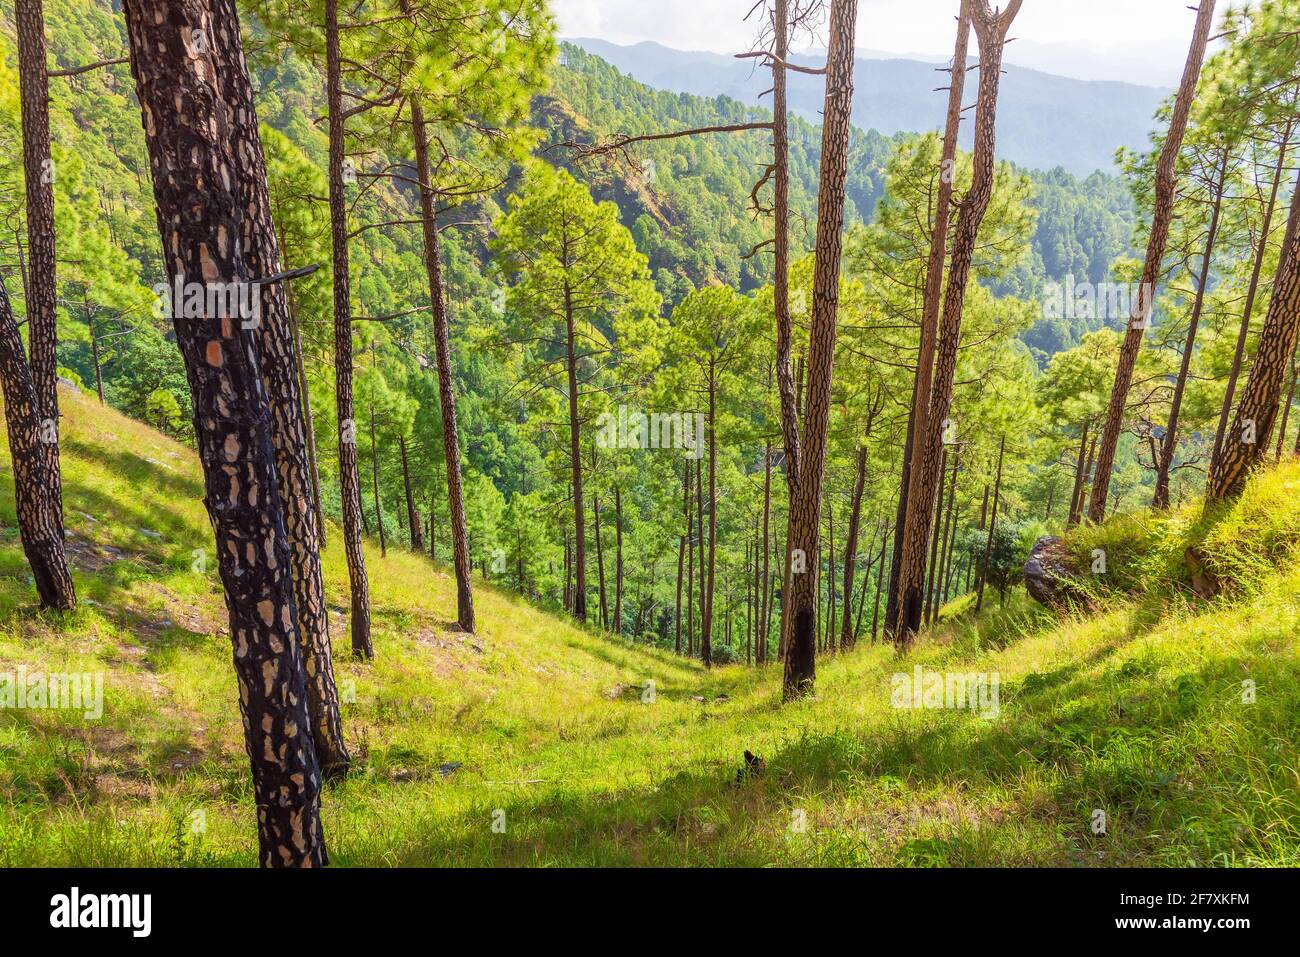 Pine tree forest  on mountain slopes of Himalayas mountains of Binsar wildlife sanctuary at Almora, Uttarakhand, India. Stock Photo